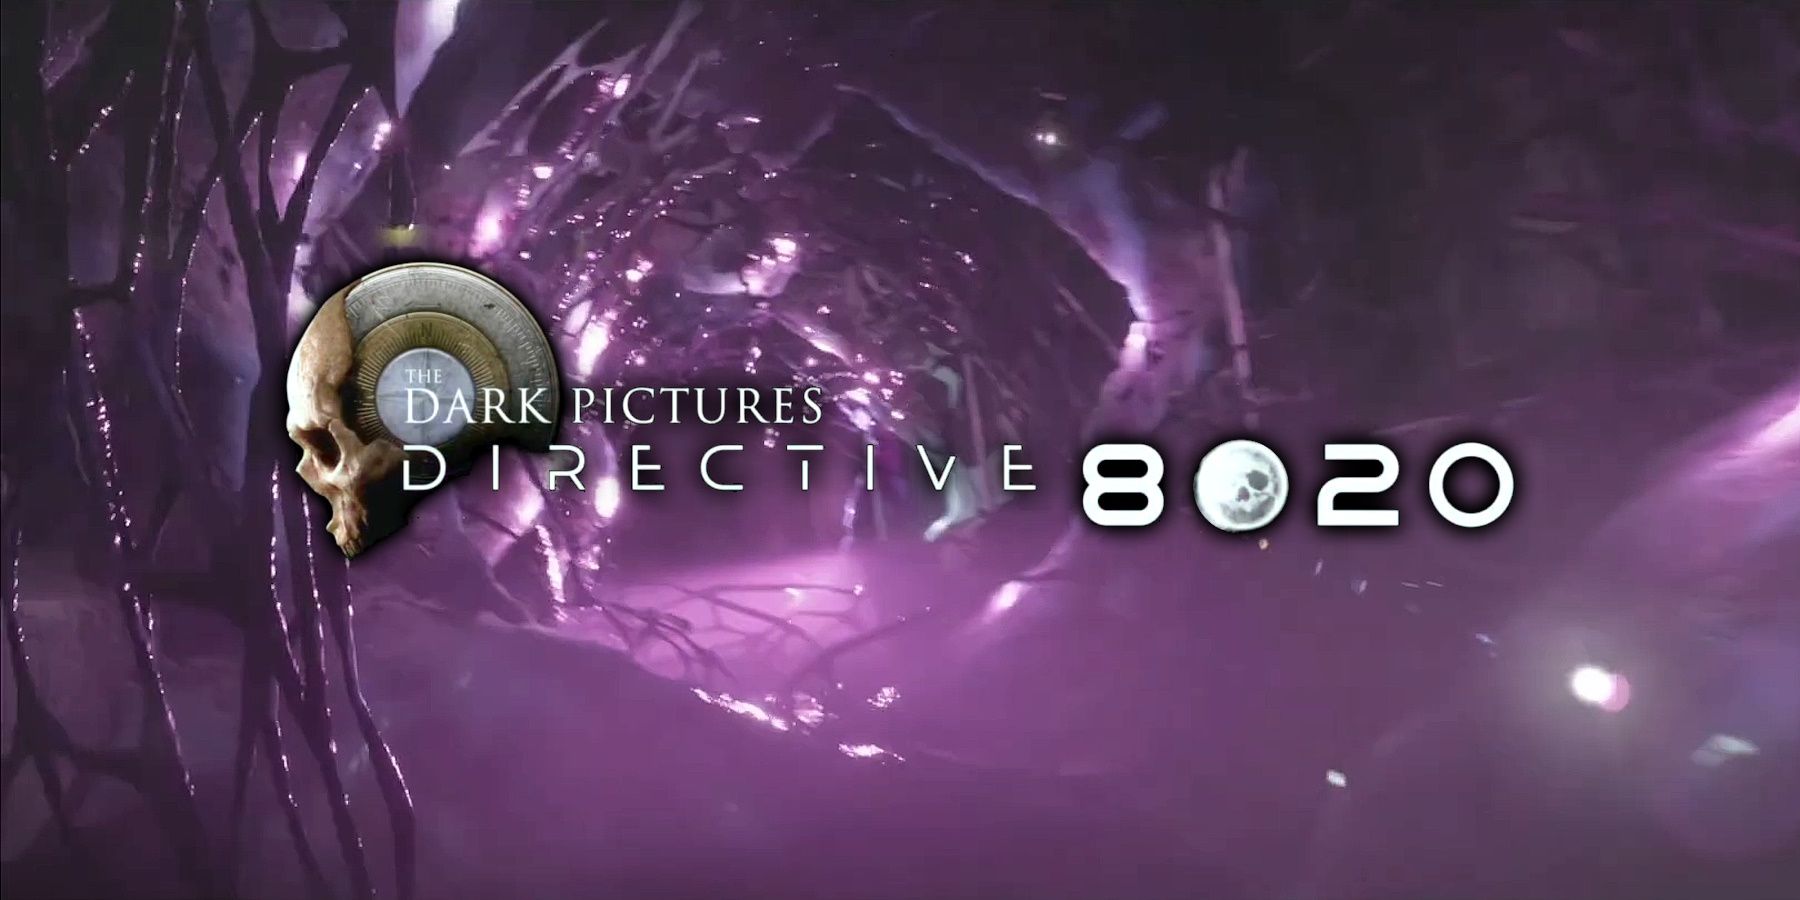 Dark Pictures Directive 8020 trailer still with game logo